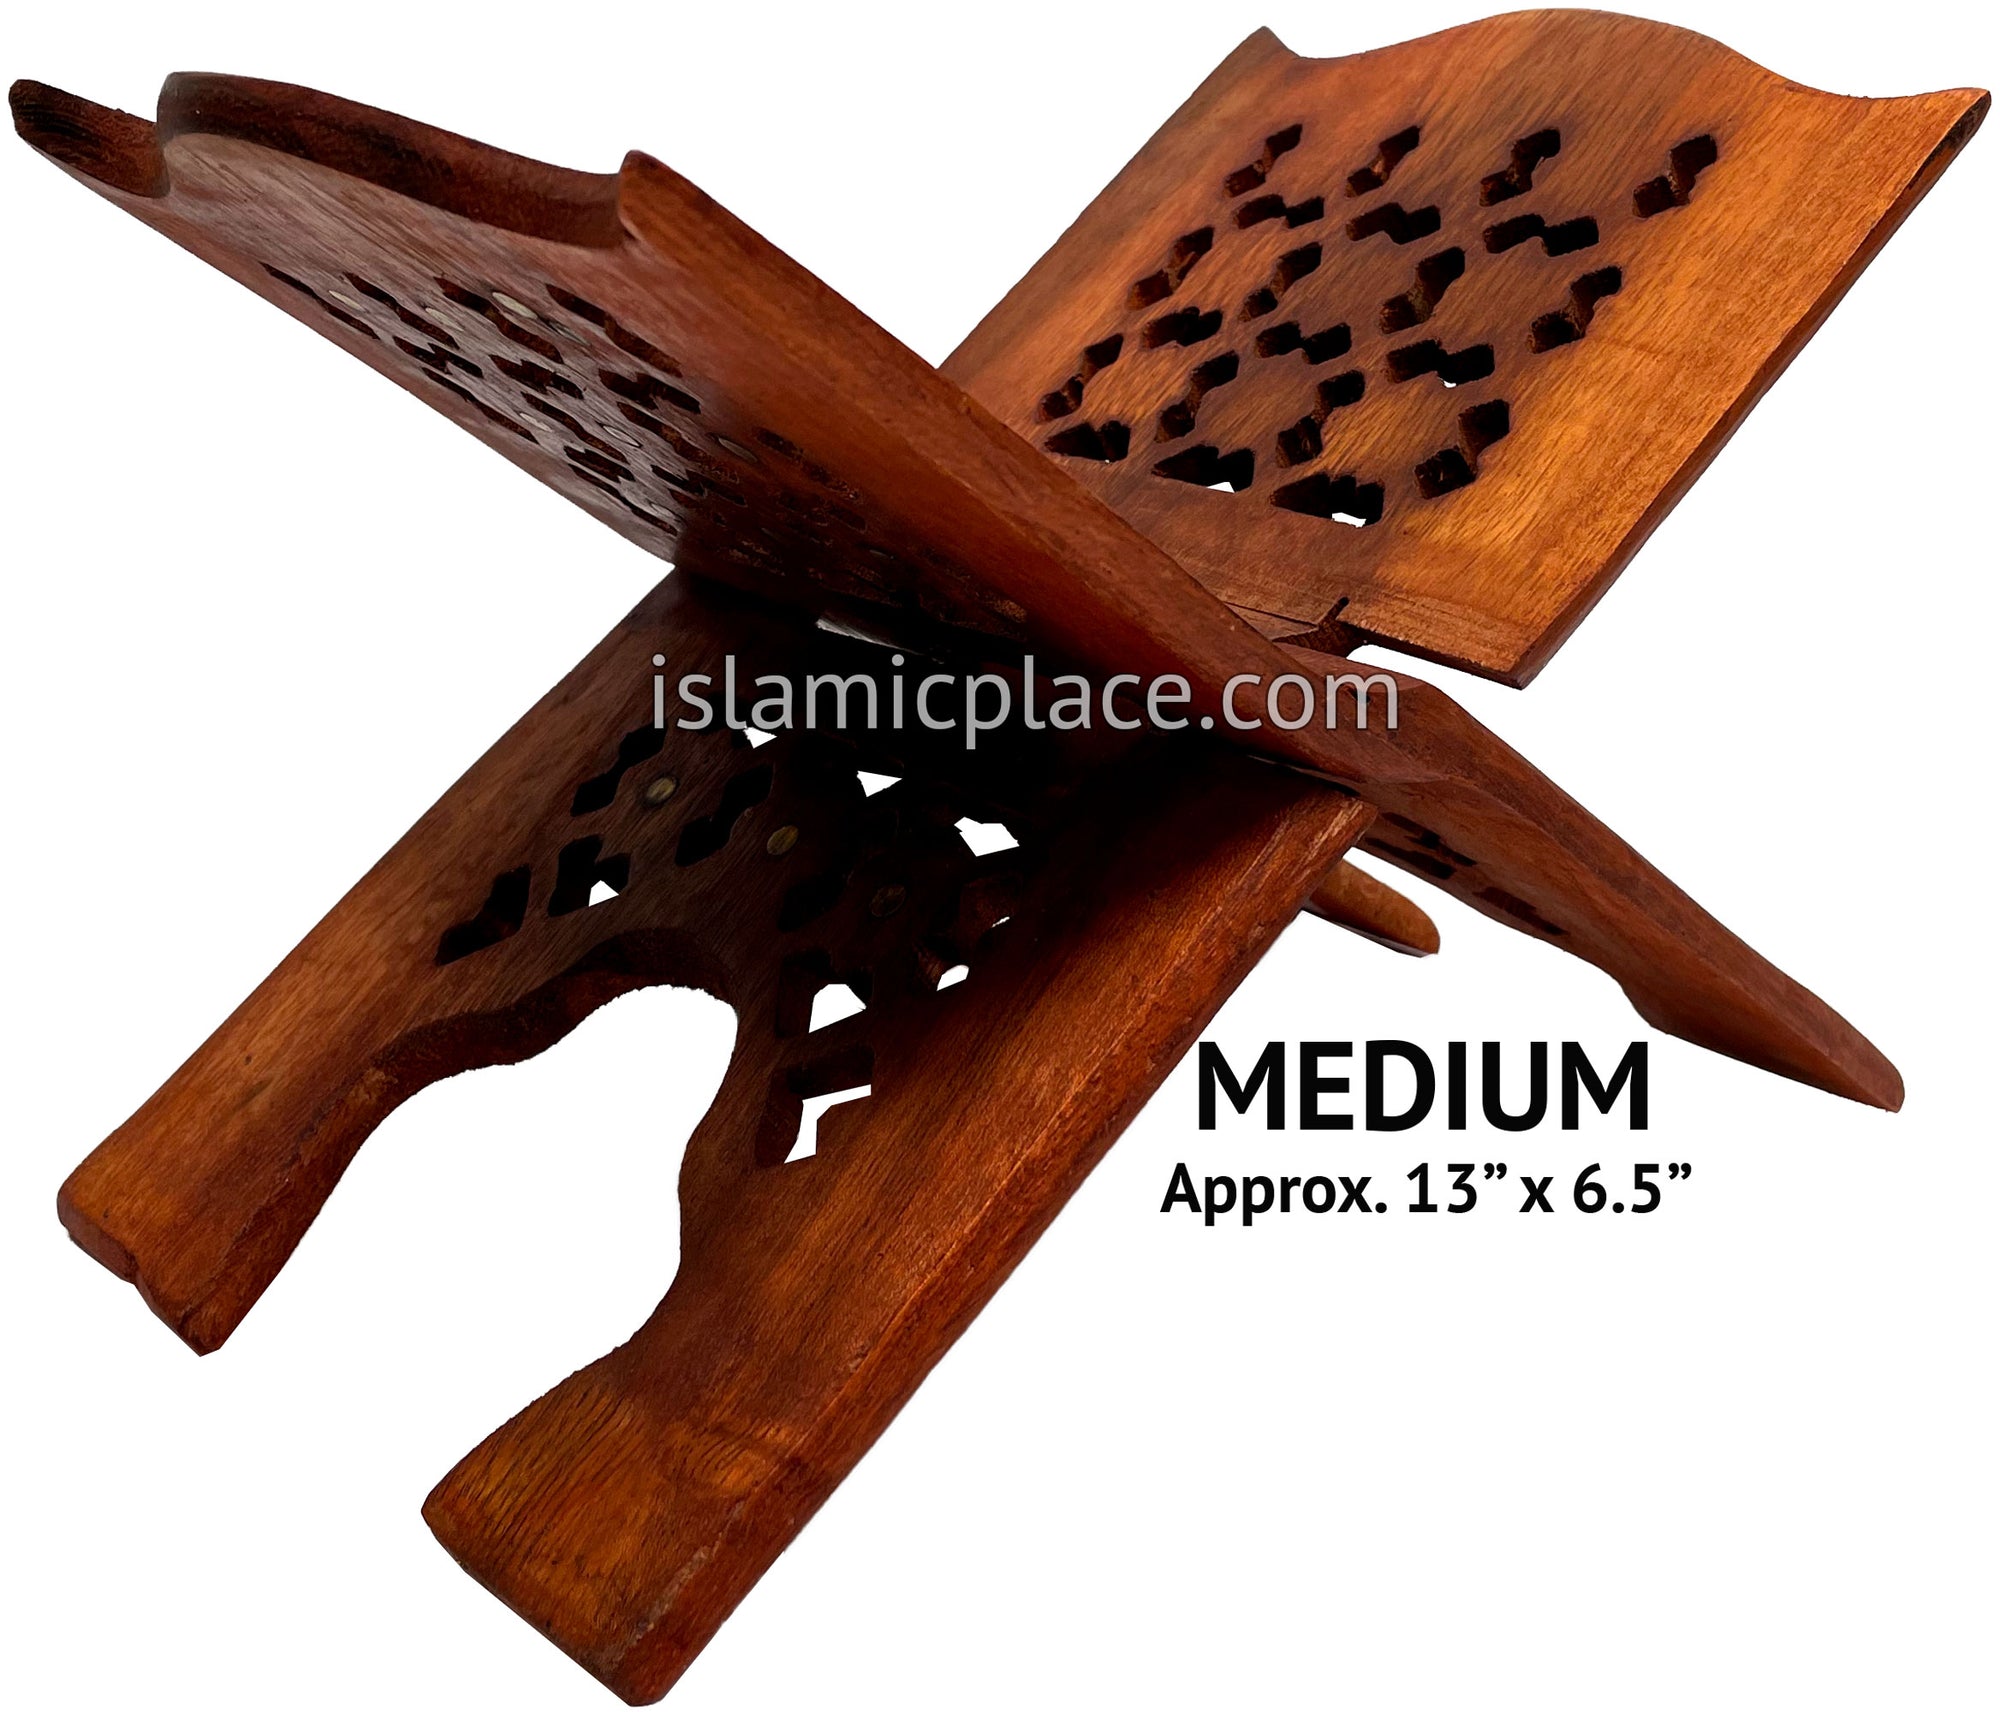 Mujeeb Design Wooden Carved Quran book holder - Medium Rehal